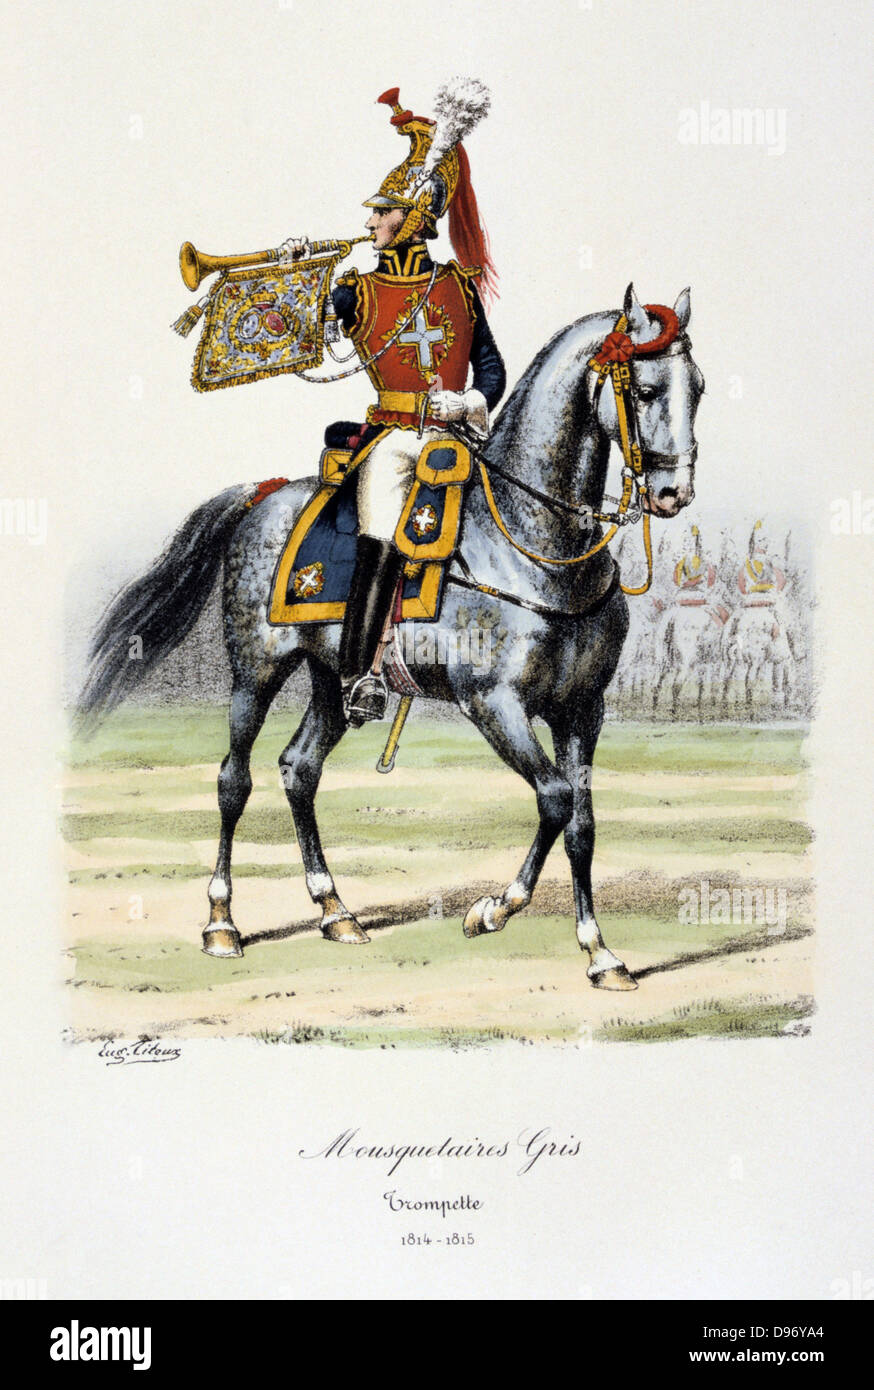 Mounted Trumpeter of the Grey Musketeers, 1814-1815. From 'Histoire de la maison militaire du Roi de 1814 a 1830' by Eugene Titeux, Paris, 1890. Stock Photo